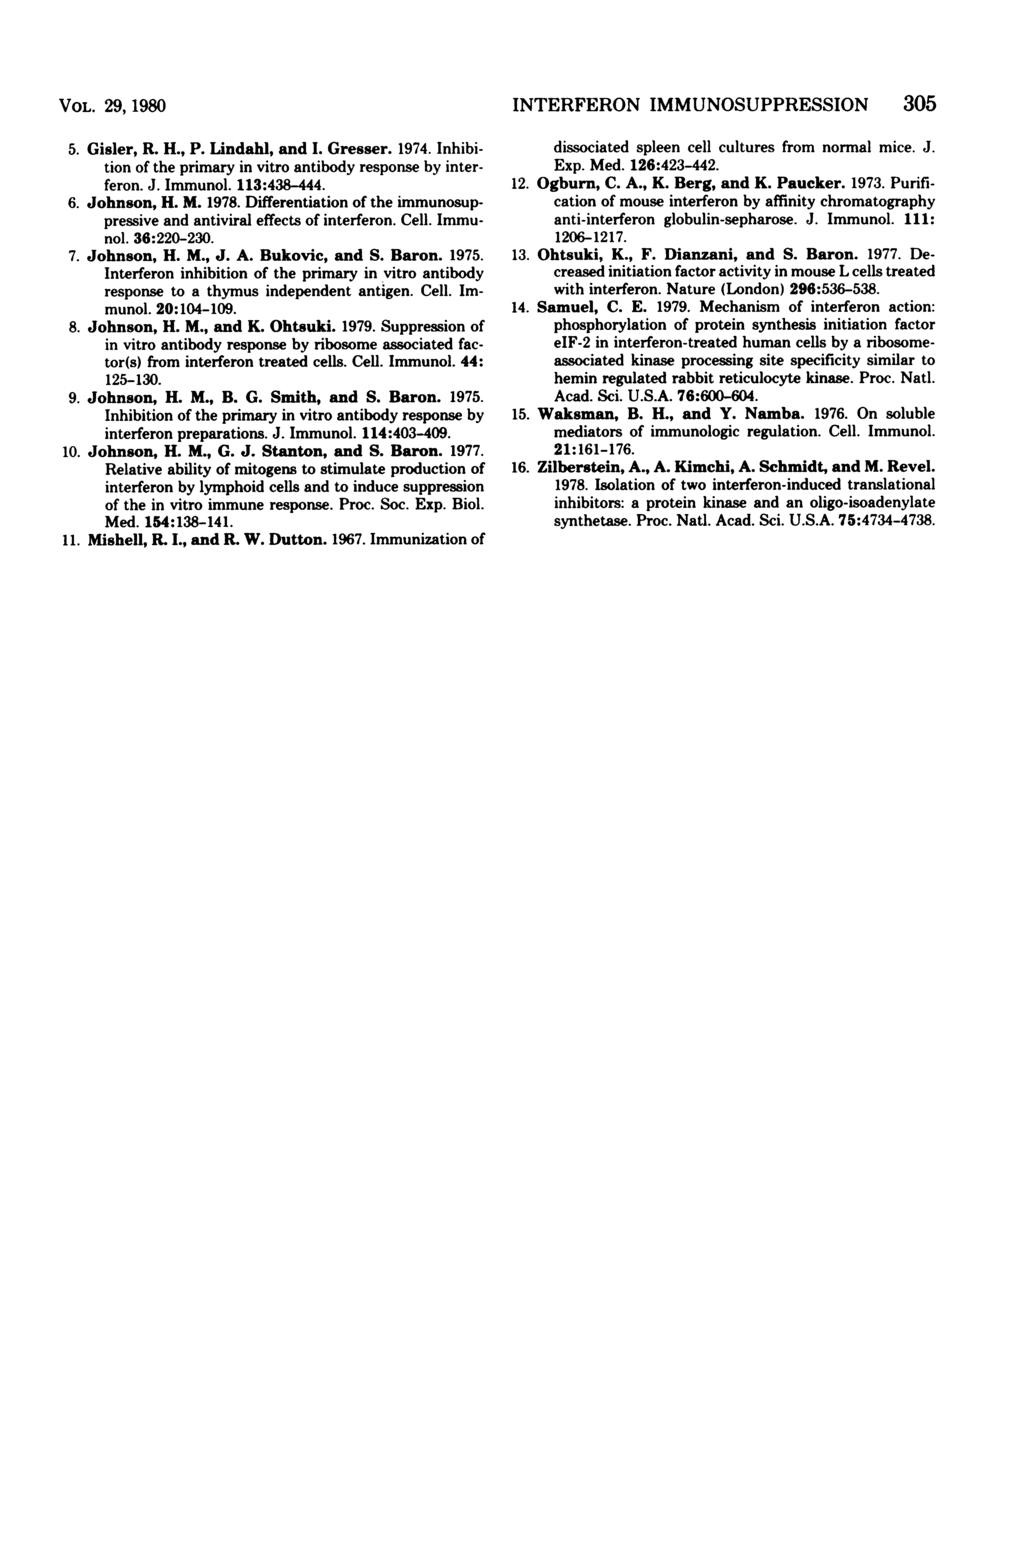 VOL. 29, 1980 5. Gisler, R. H., P. Lindahl, and I. Gresser. 1974. Inhibition of the primary in vitro antibody response by interferon. J. Immunol. 113:438-444. 6. Johnson, H. M. 1978.